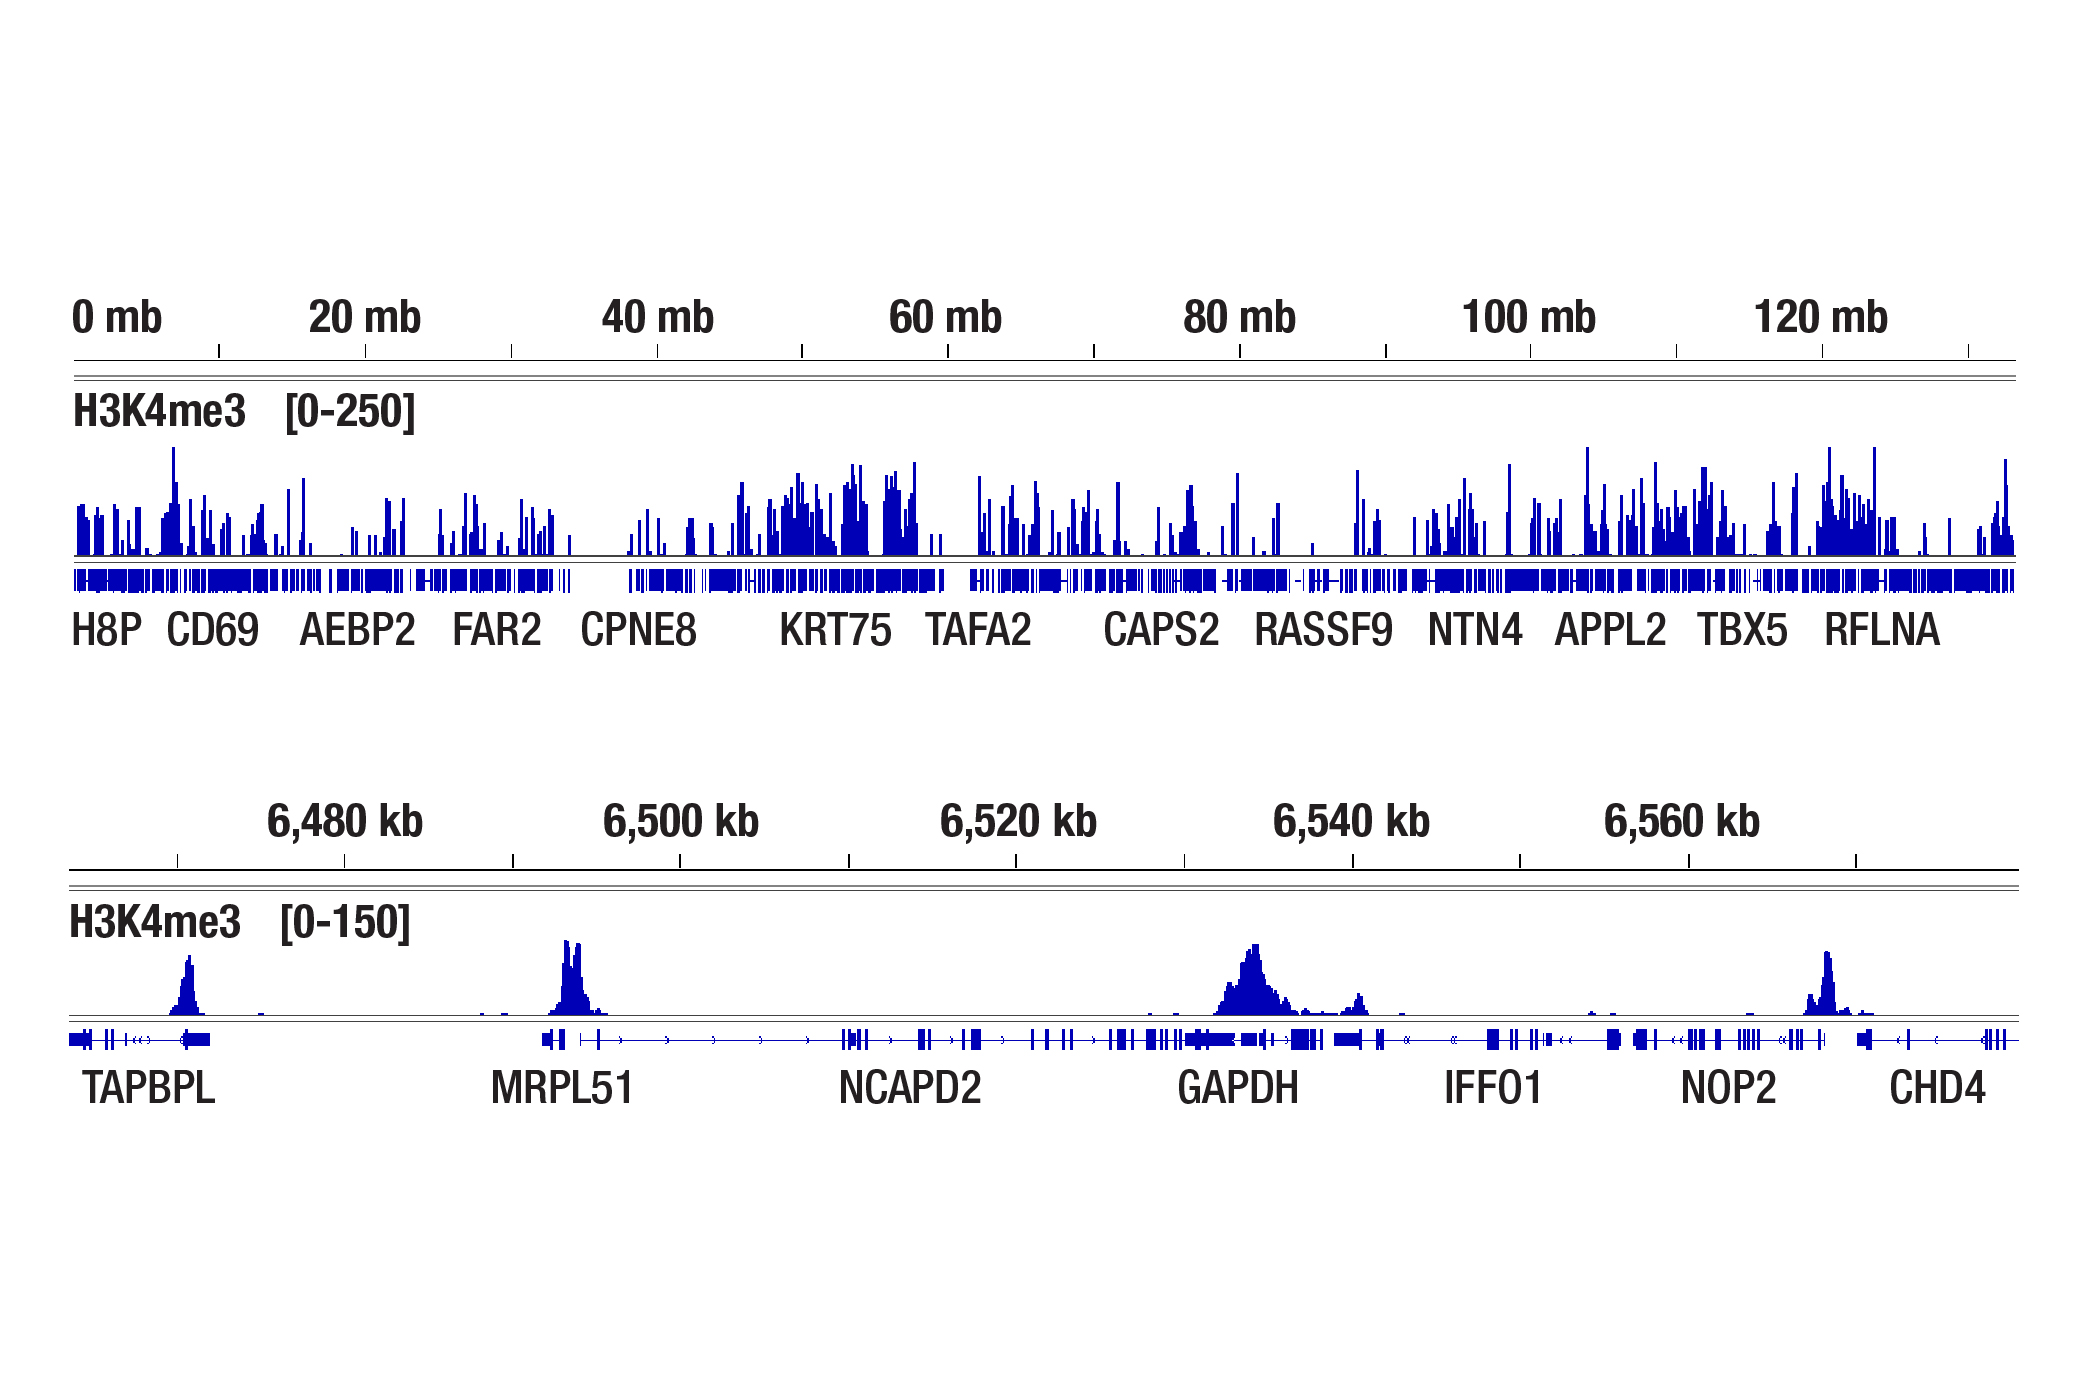 Does the CUT&Tag assay show a bias toward euchromatin or heterochromatin? (H3K4me3)